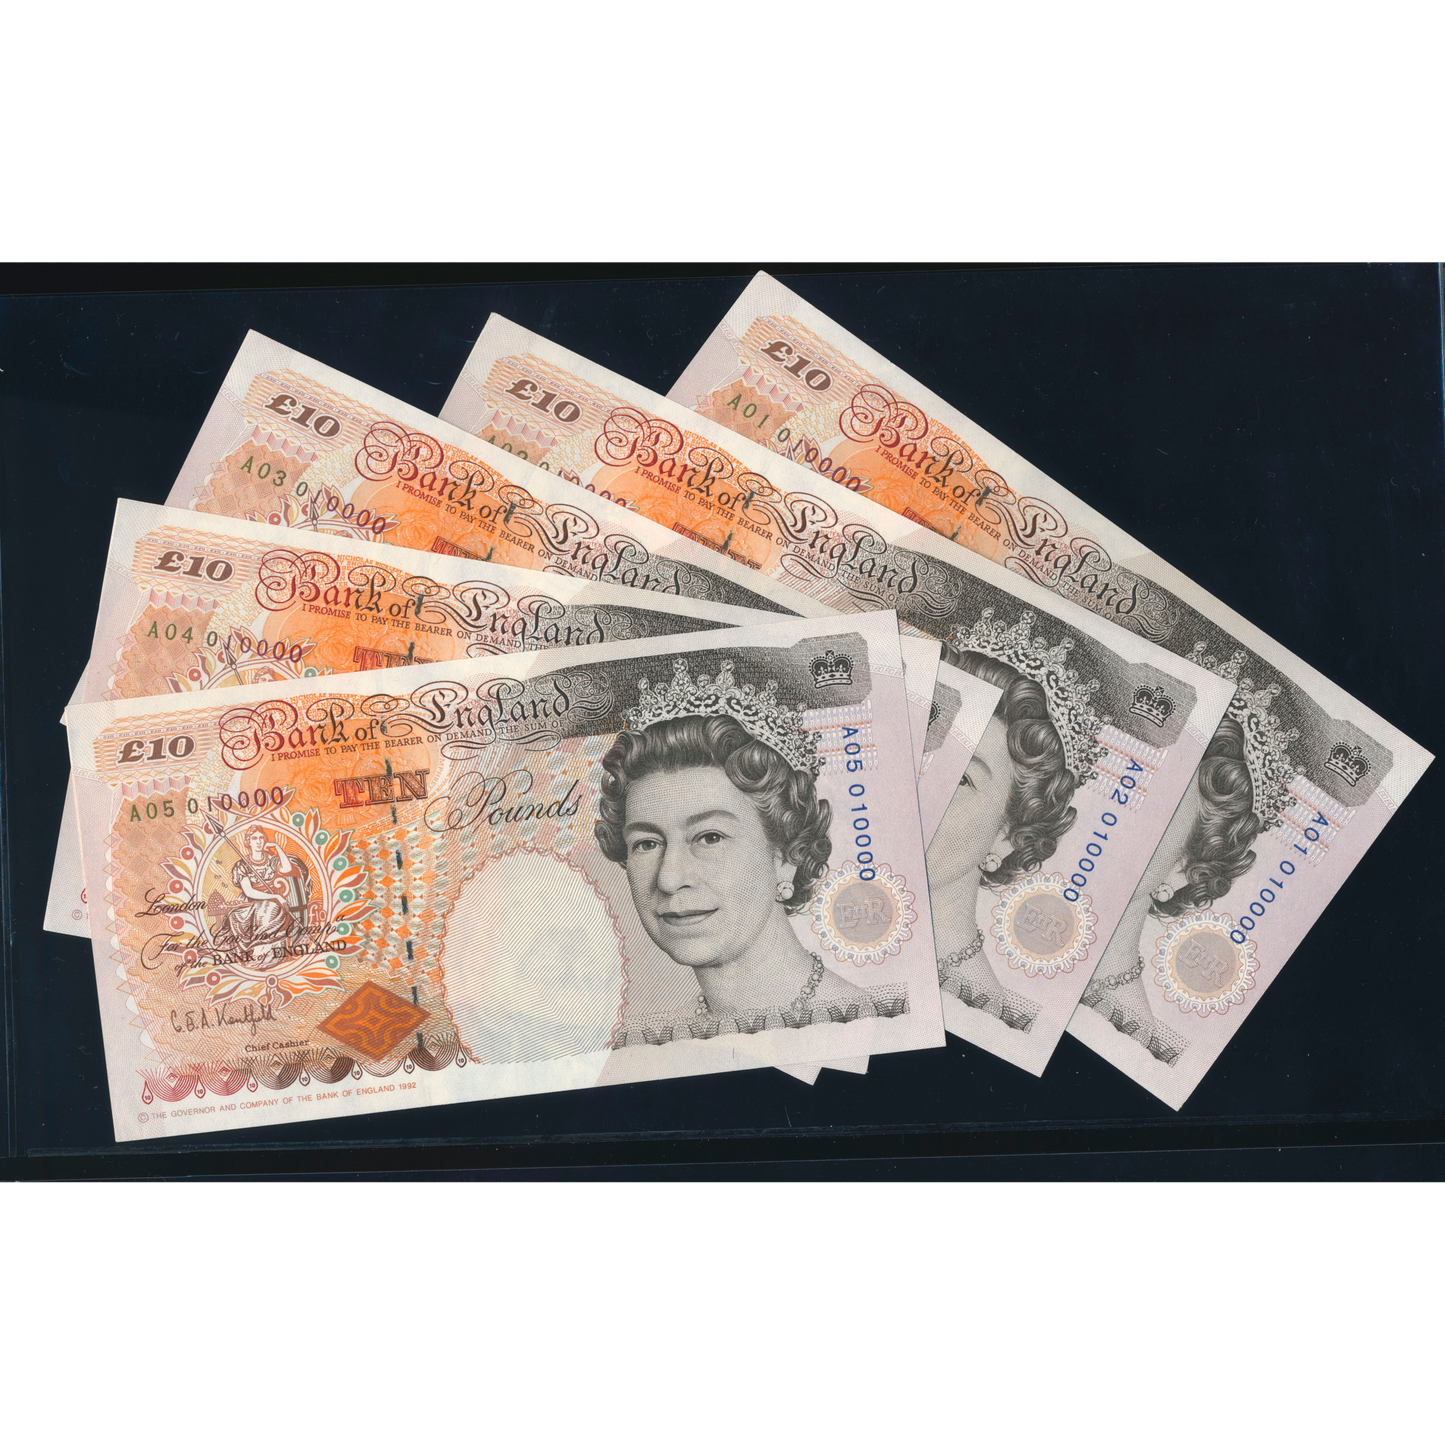 ENGLAND P.383a B366 1992-1993 Kentfield £10 UNC 5 consecutive notes A01 to A05